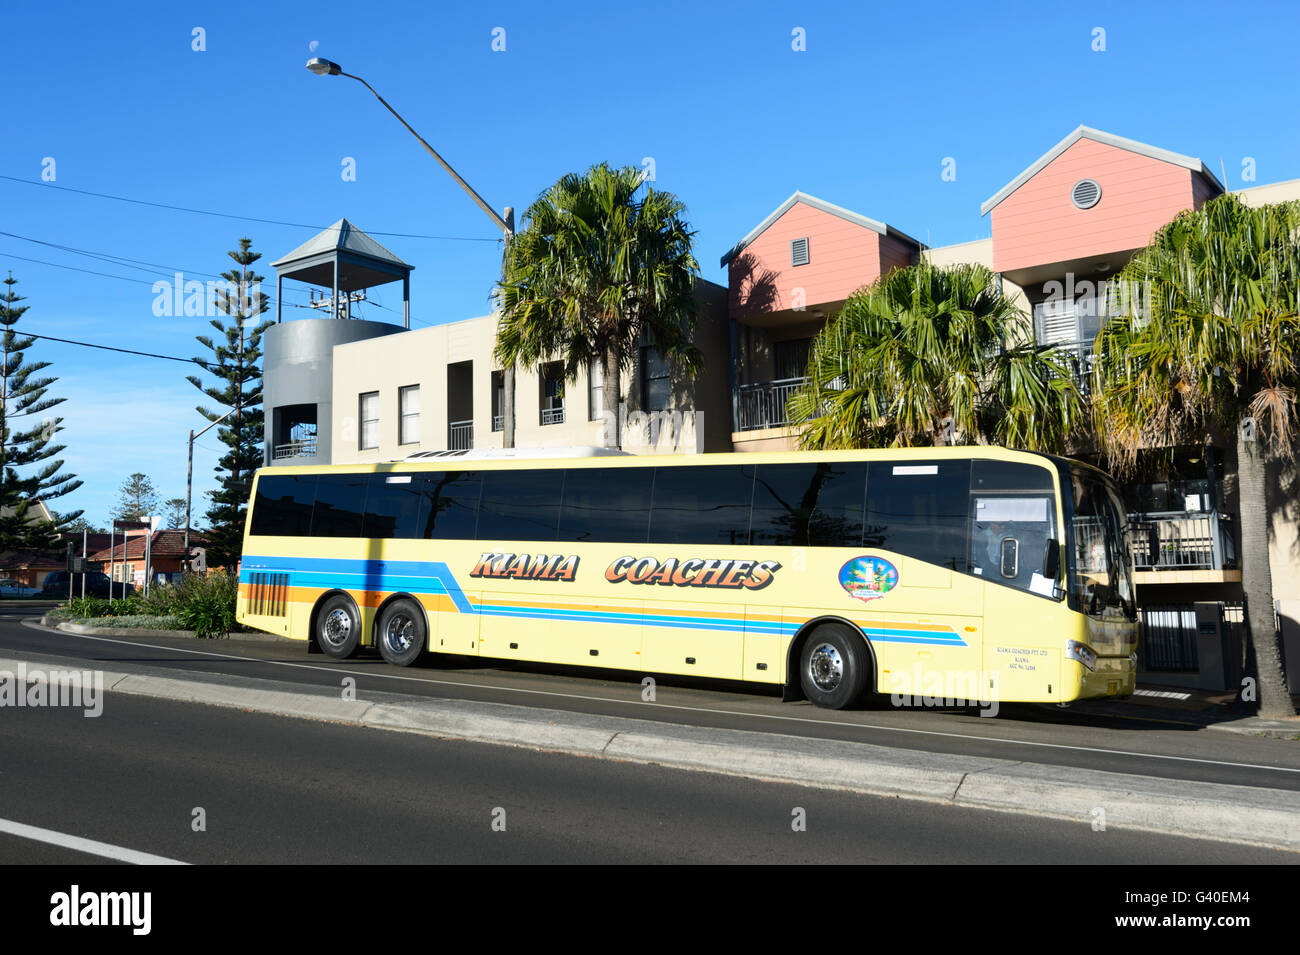 Local public bus transport, Kiama Coaches, Illawarra Coast, New South Wales, NSW, Australia Stock Photo